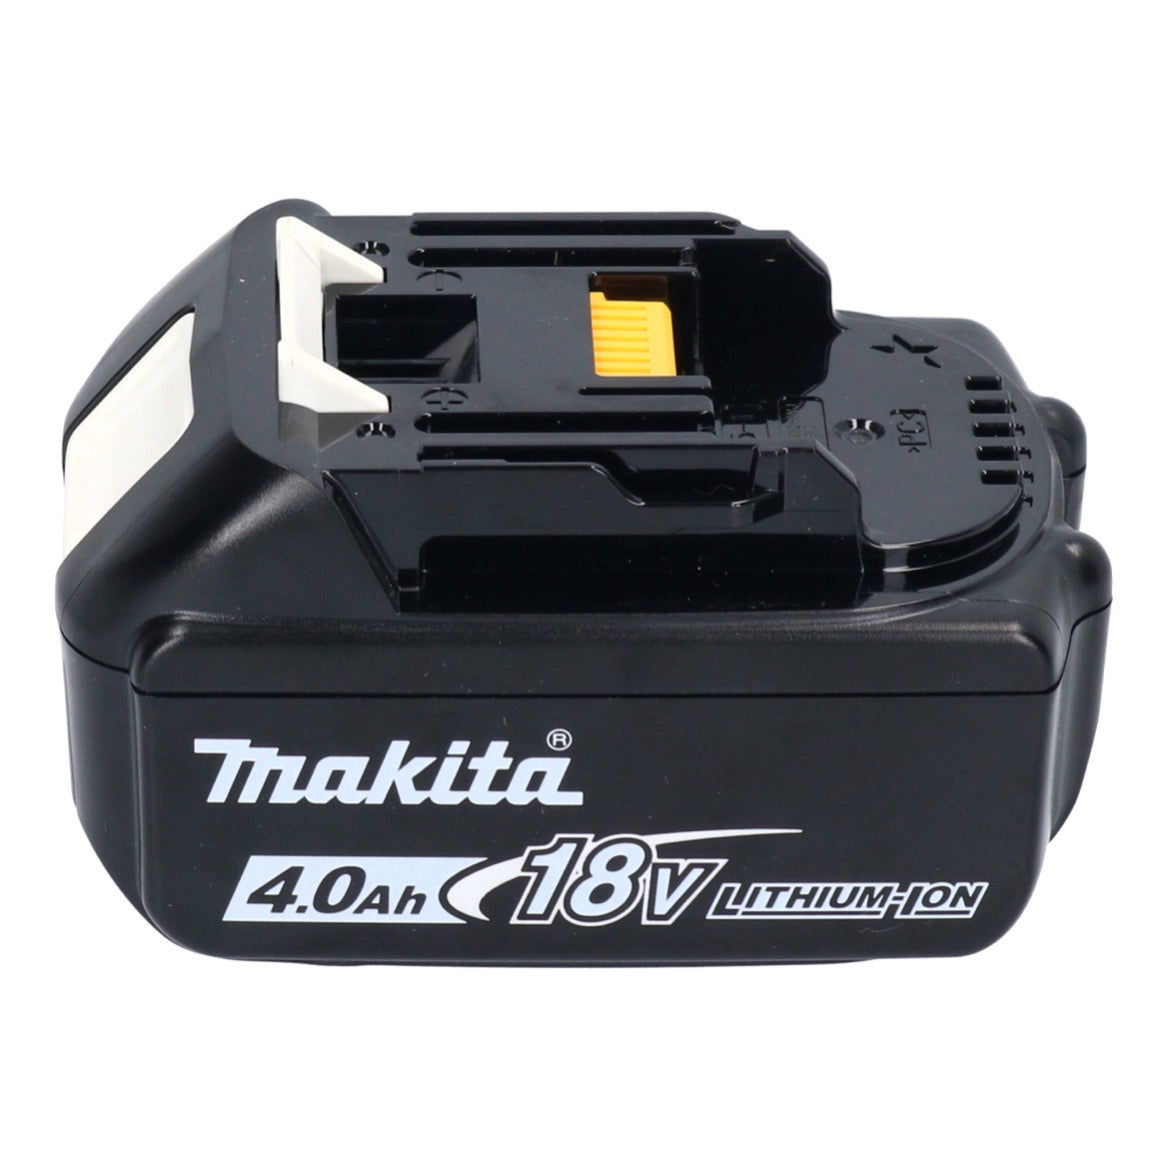 Makita DTD 172 M1J Akku Schlagschrauber 18 V 180 Nm 1/4" Brushless + 1x Akku 4,0 Ah + Makpac - ohne Ladegerät